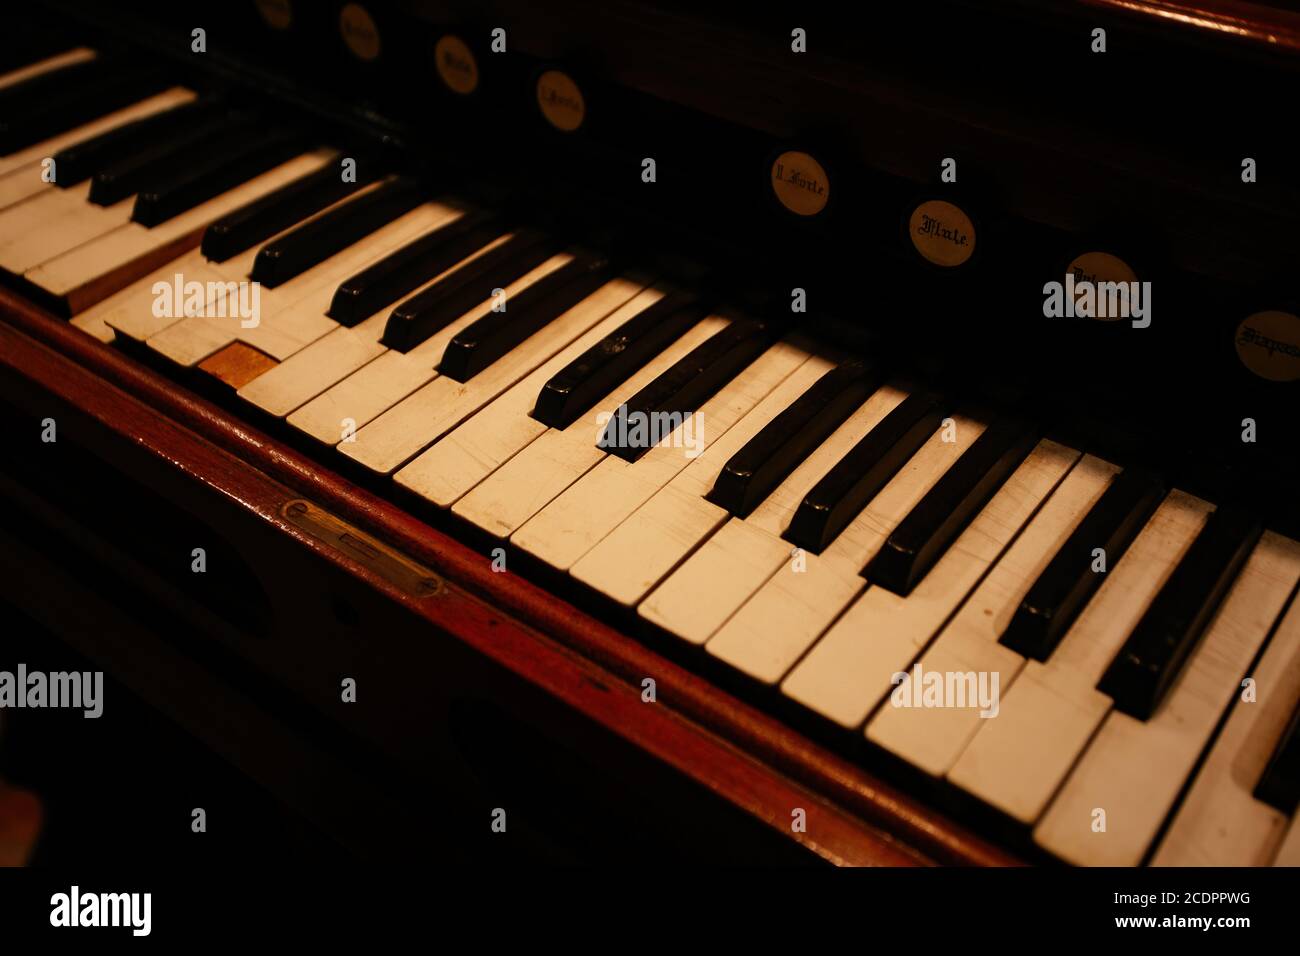 Old vintage harmonium piano keyboard. Close up view Stock Photo